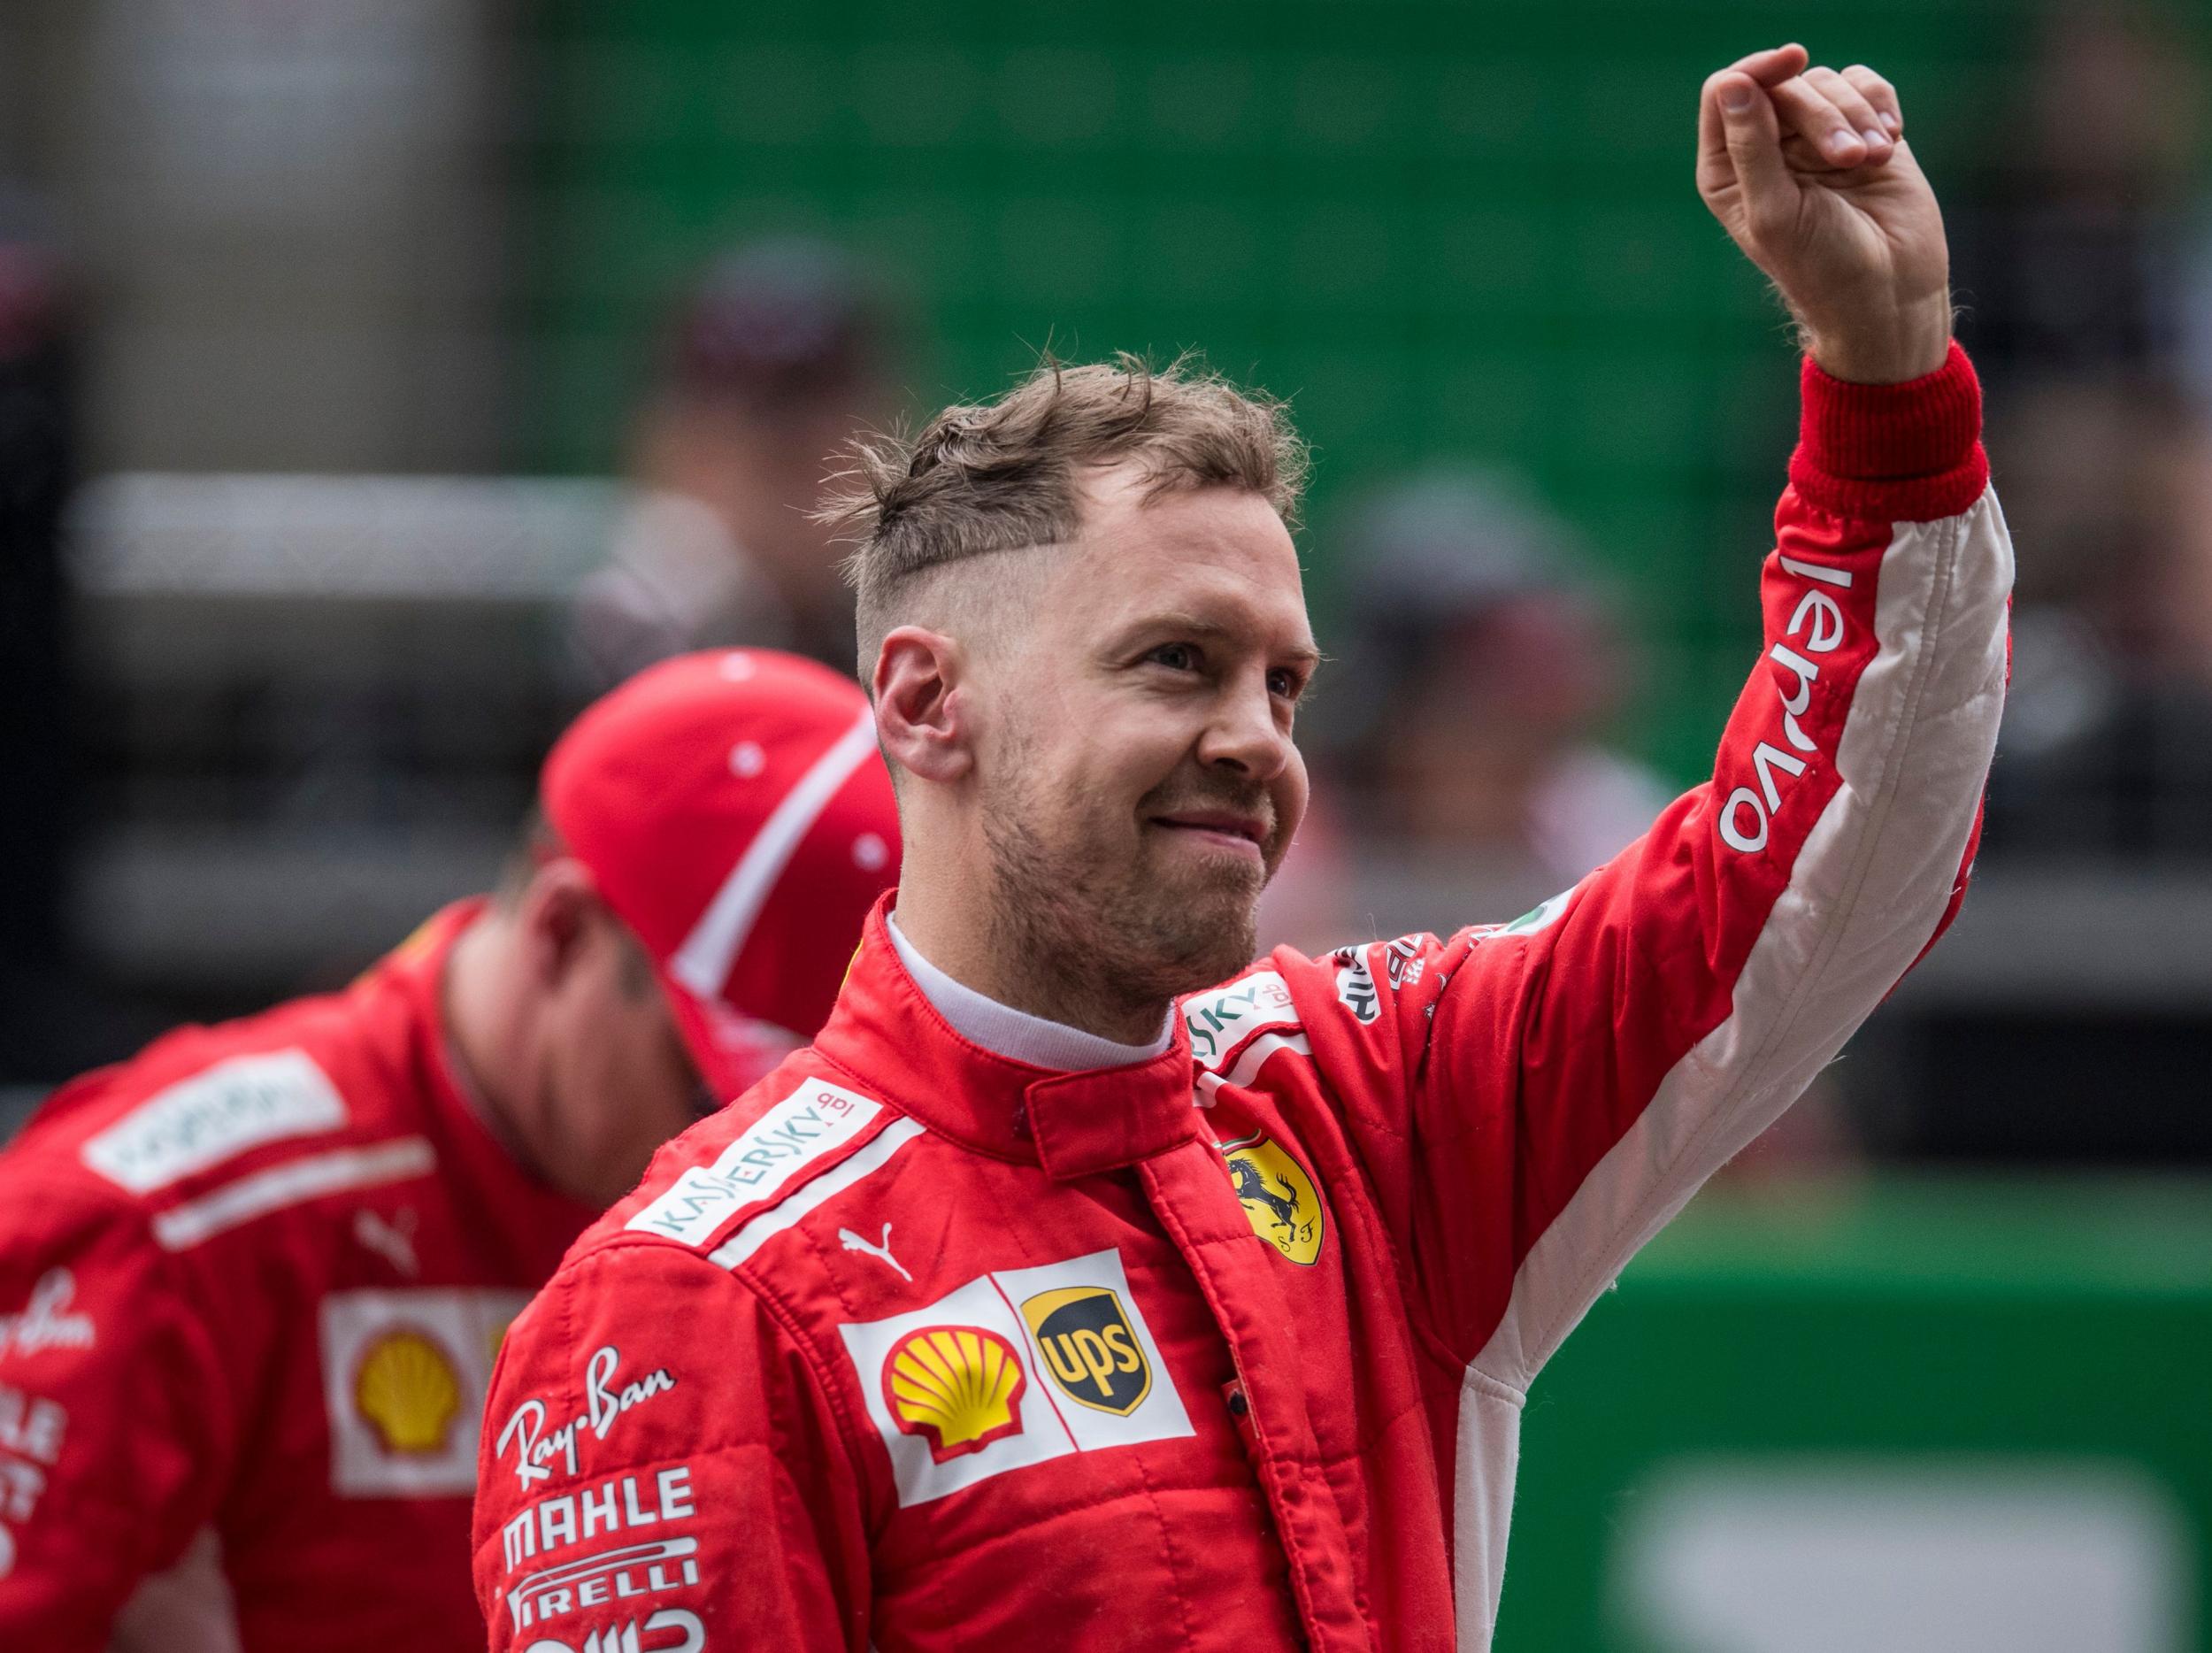 Sebastian Vettel qualified on pole position